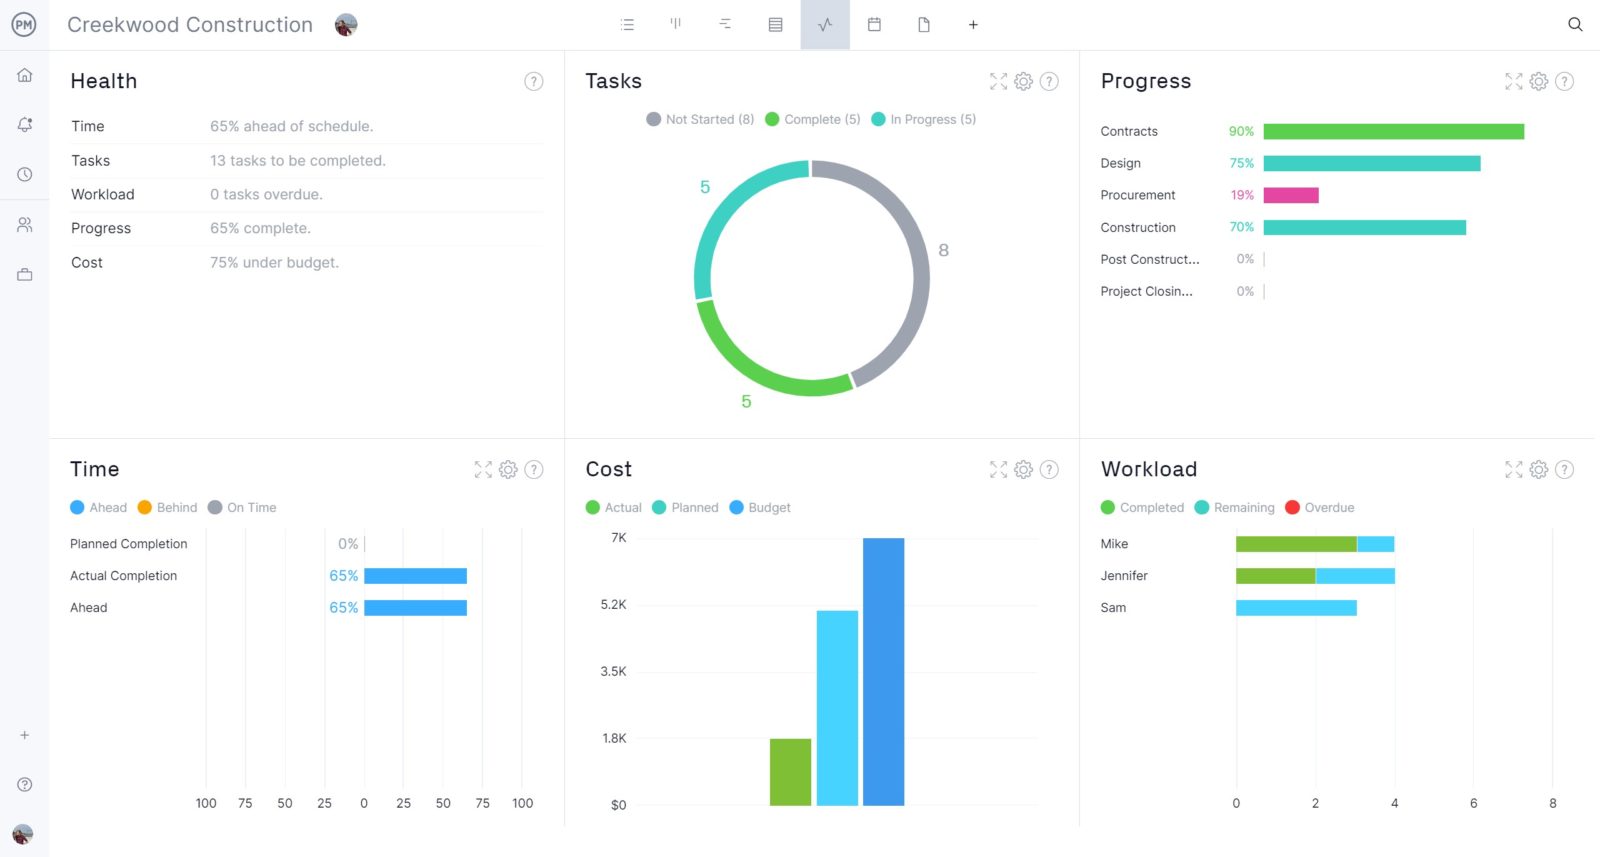 Dashboard showing six key project metrics